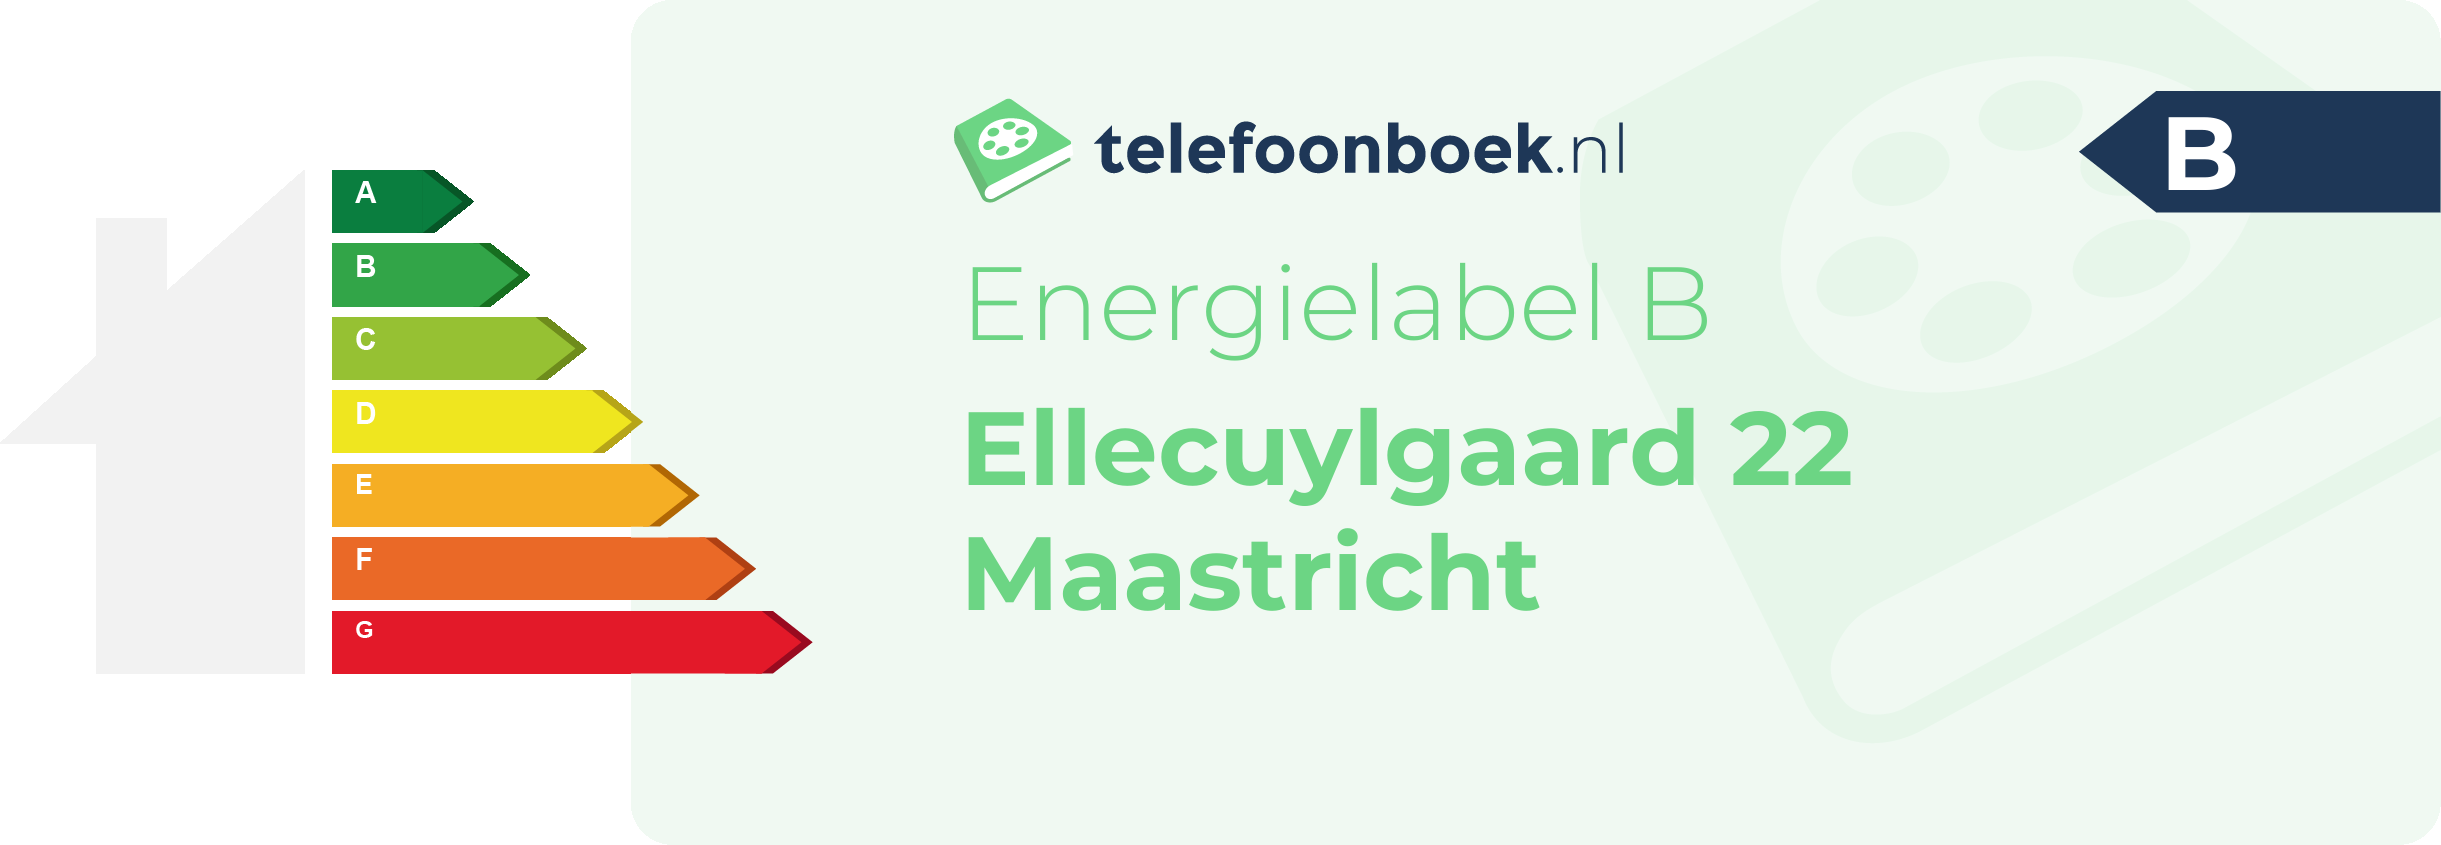 Energielabel Ellecuylgaard 22 Maastricht